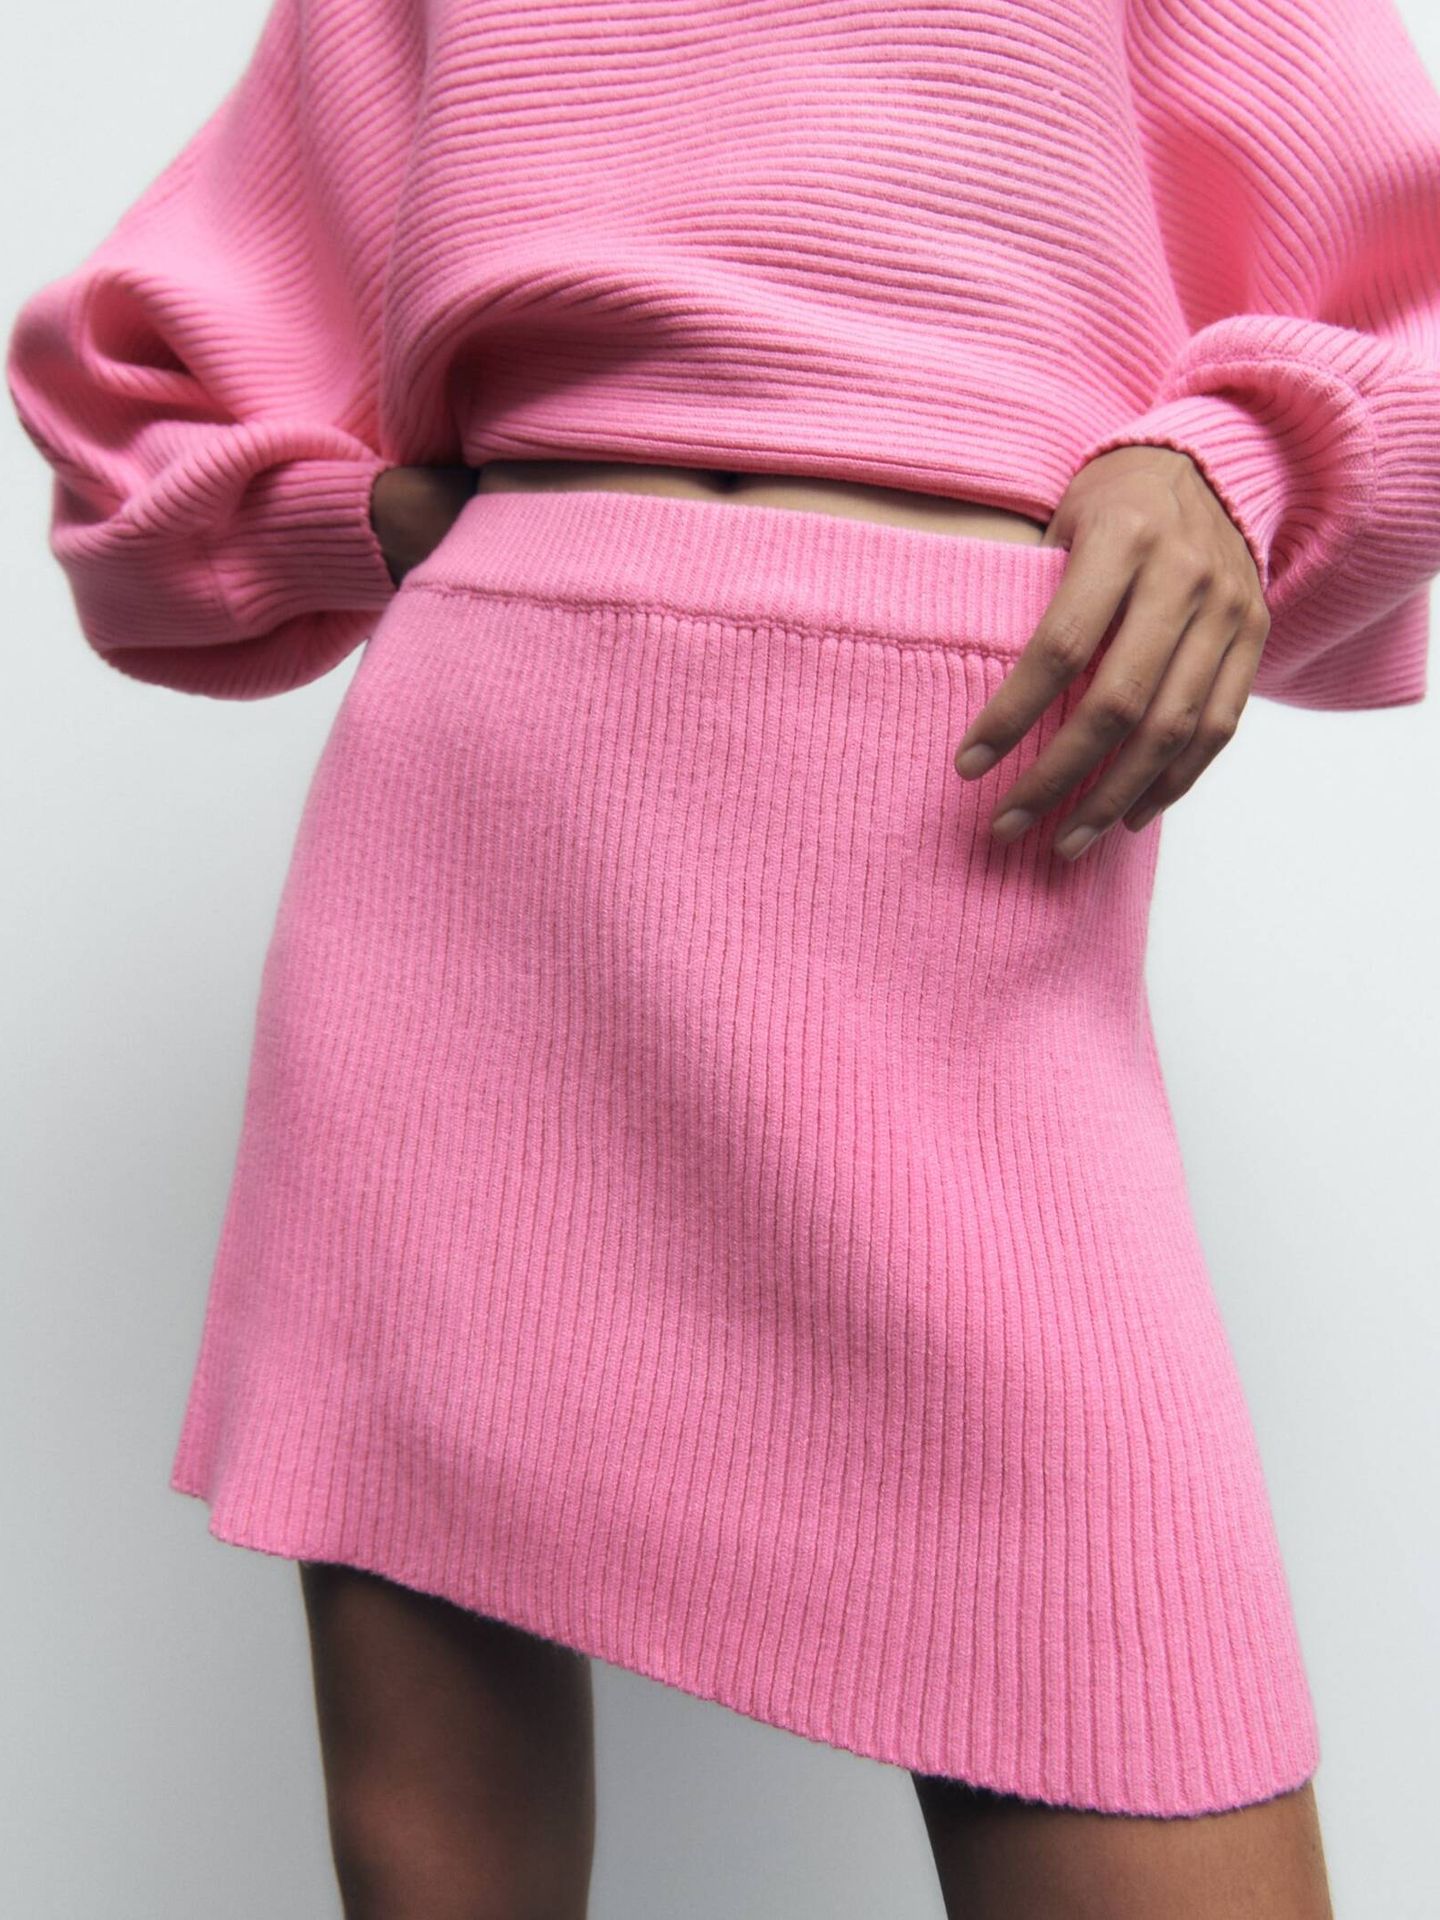 Falda rosa de Zara escogida por Rocío Osorno. (Cortesía/Zara)